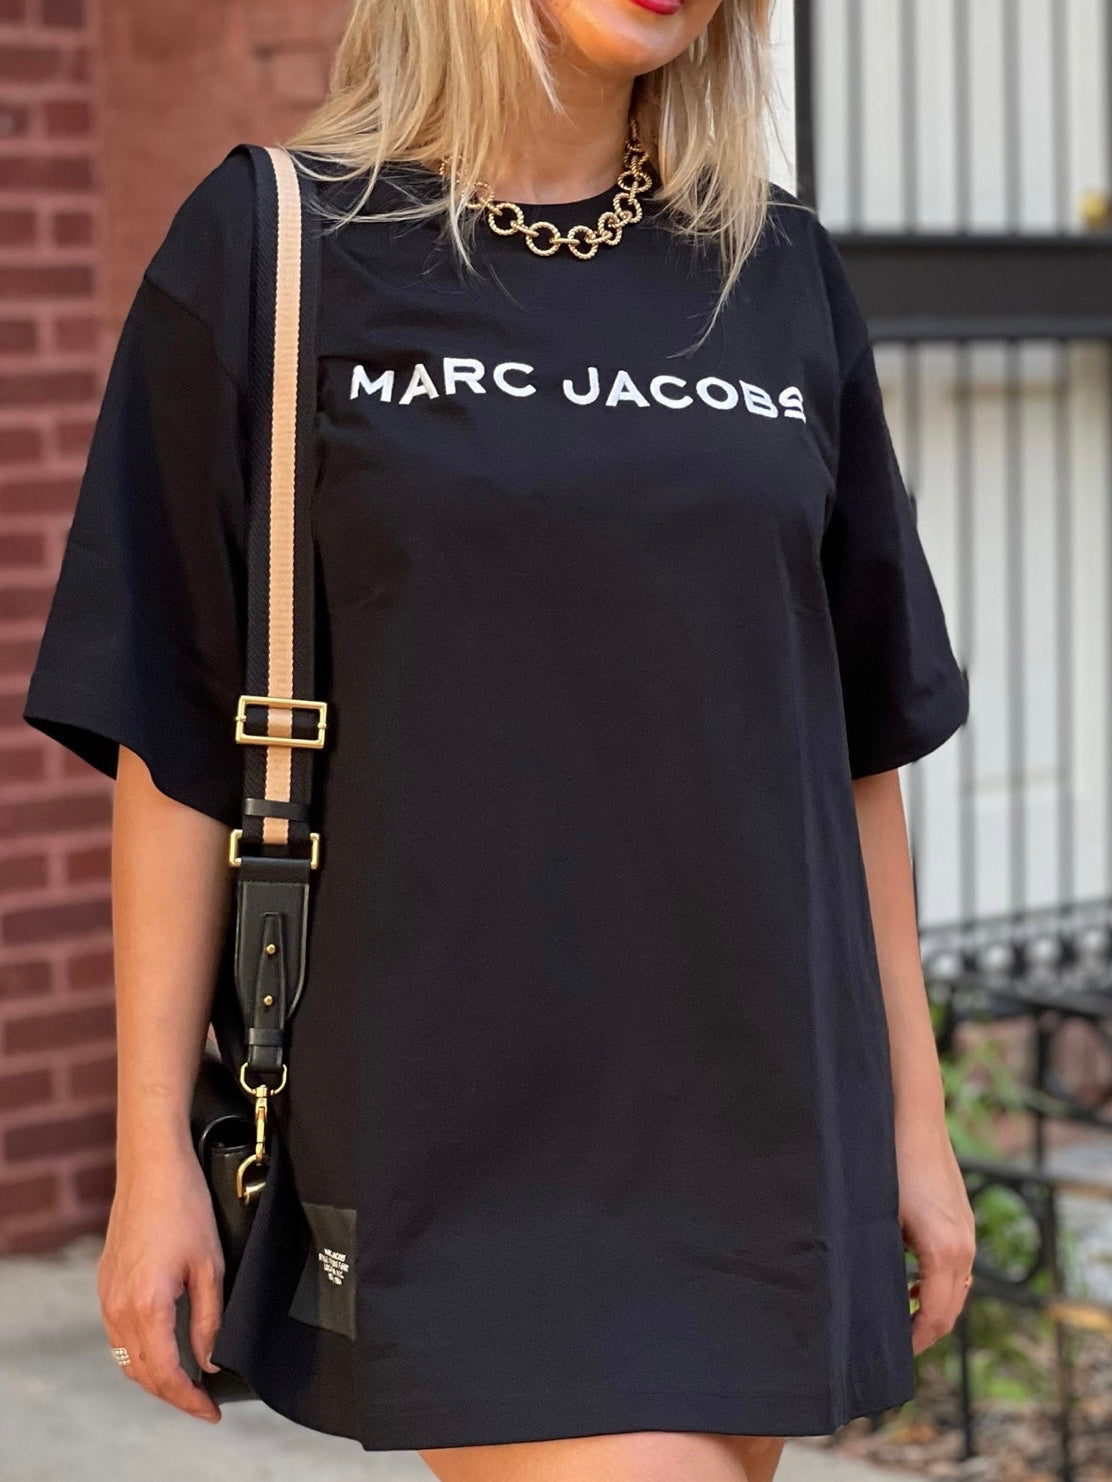 MARC JACOBS The Big T-Shirt Oversized, Black, 1 SIZE